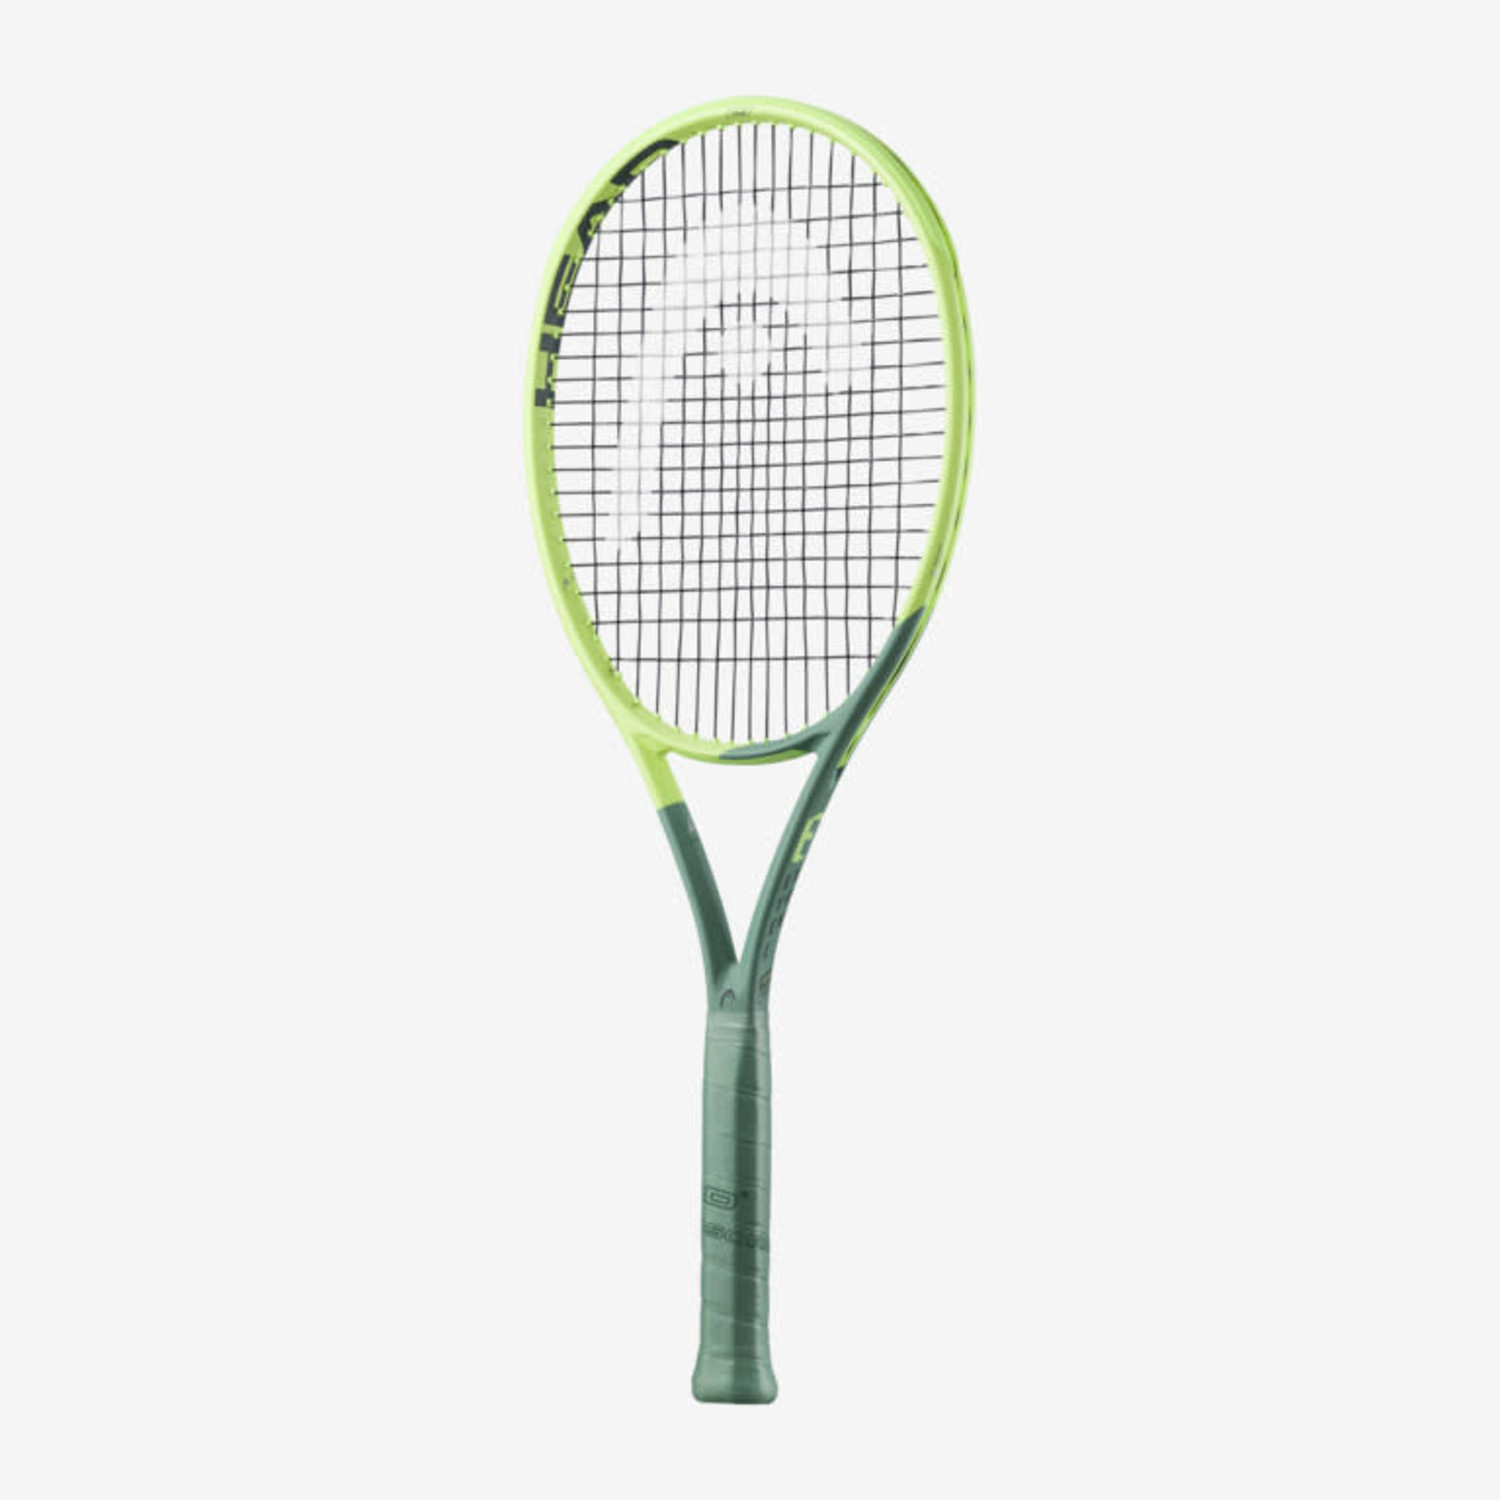 Natural Gut - Cayman Sports - Tennis Badminton & Pickleball